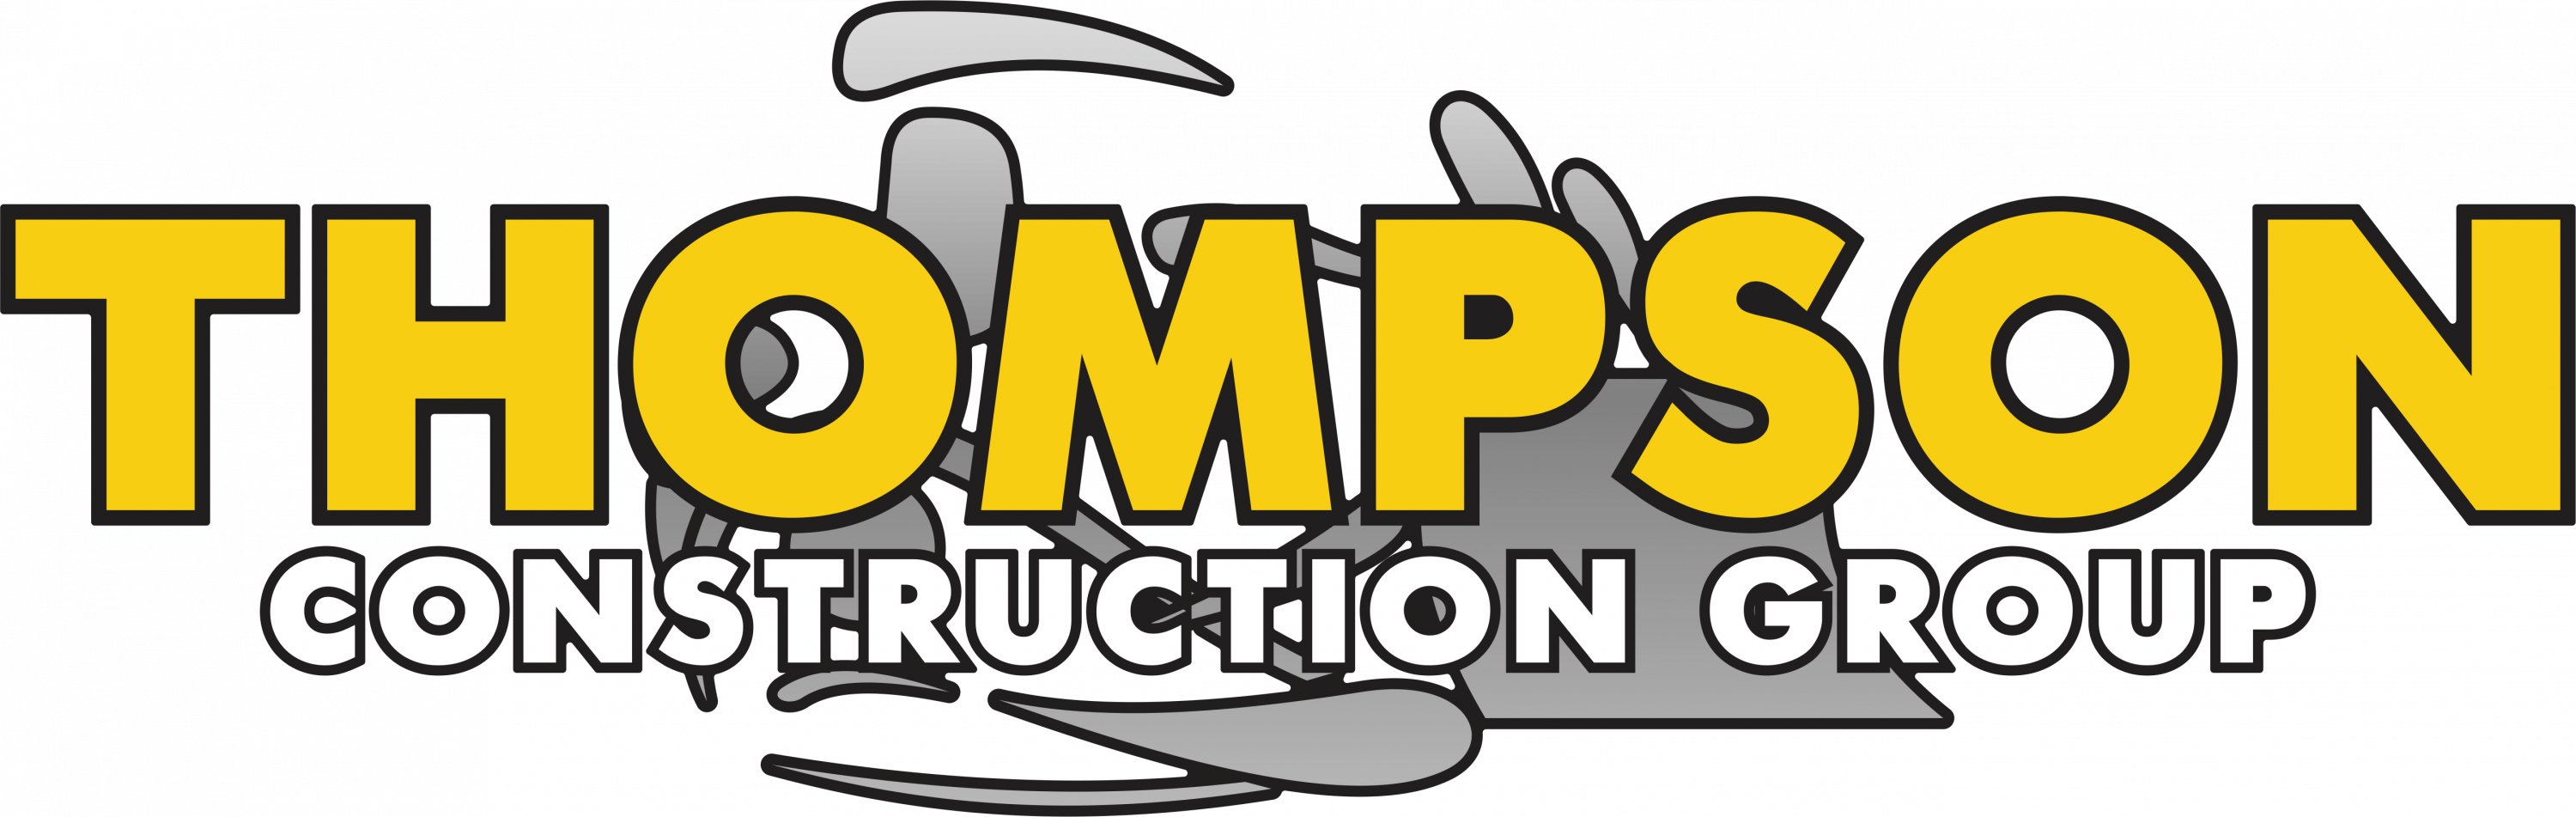 Thompson Construction Group's Image